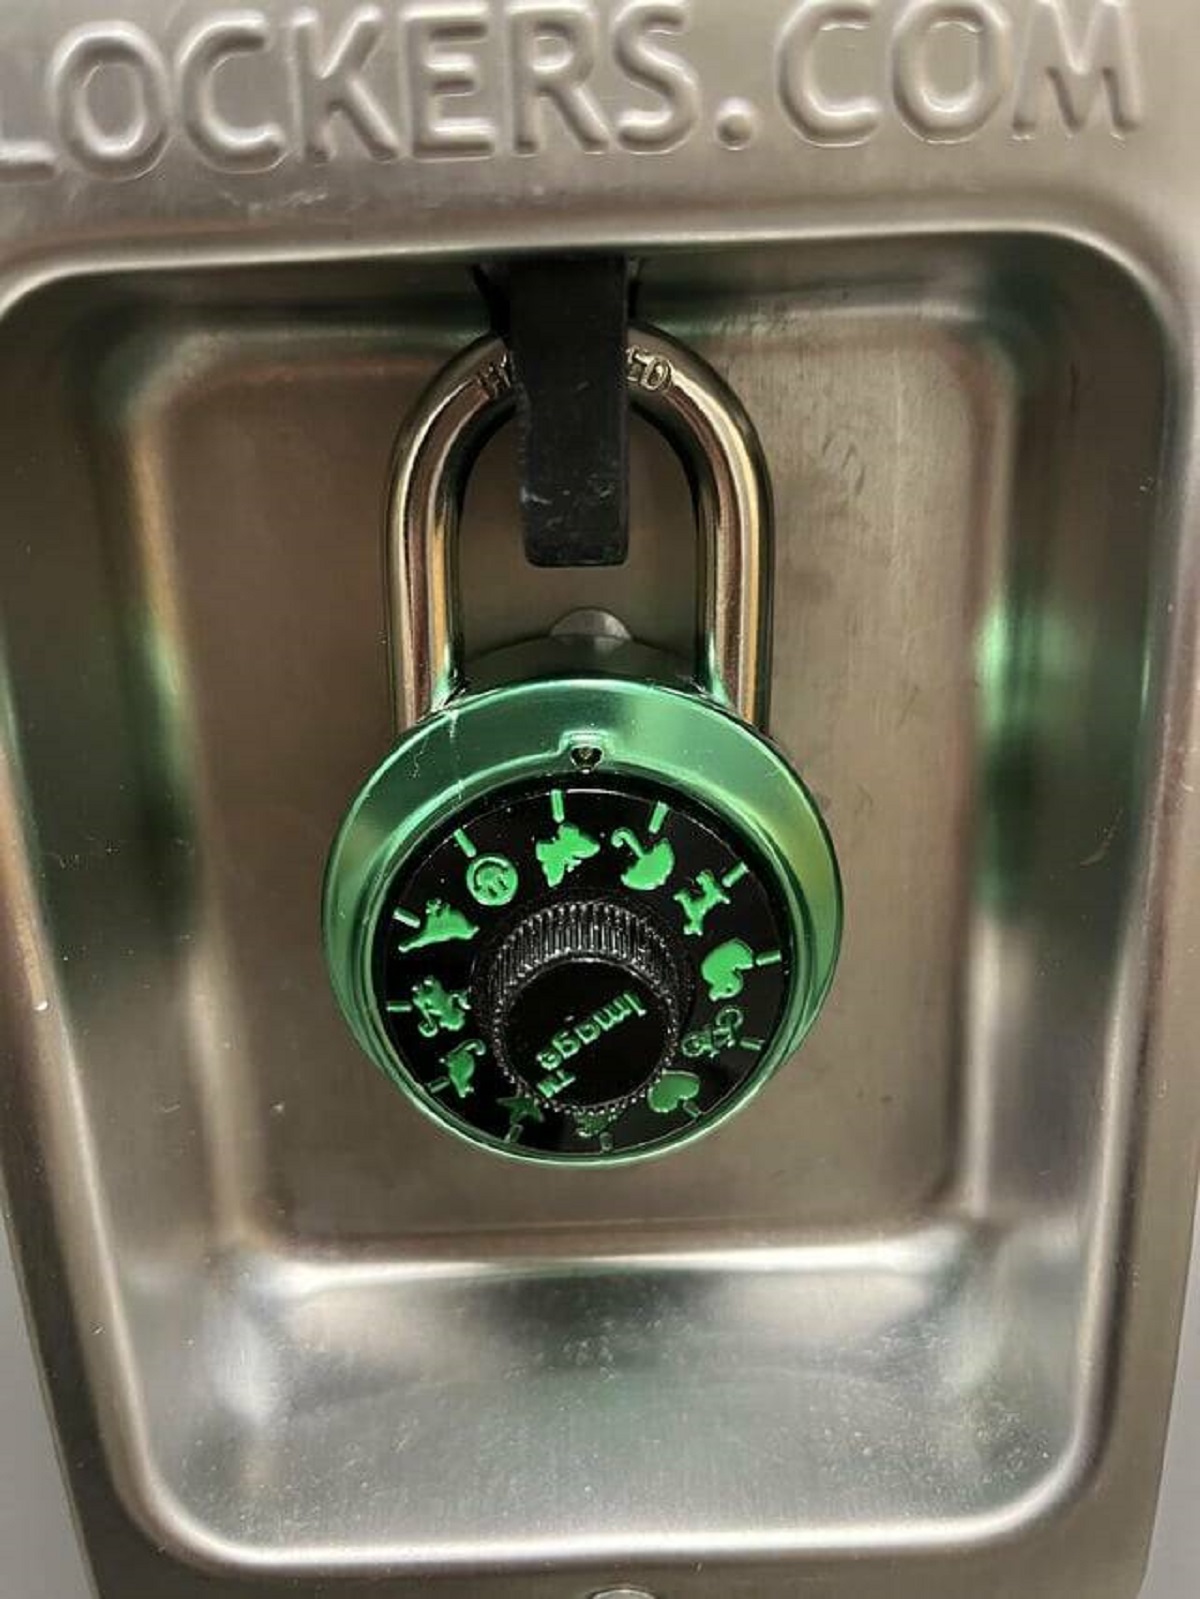 "My coworker’s lock has symbols, not numbers"